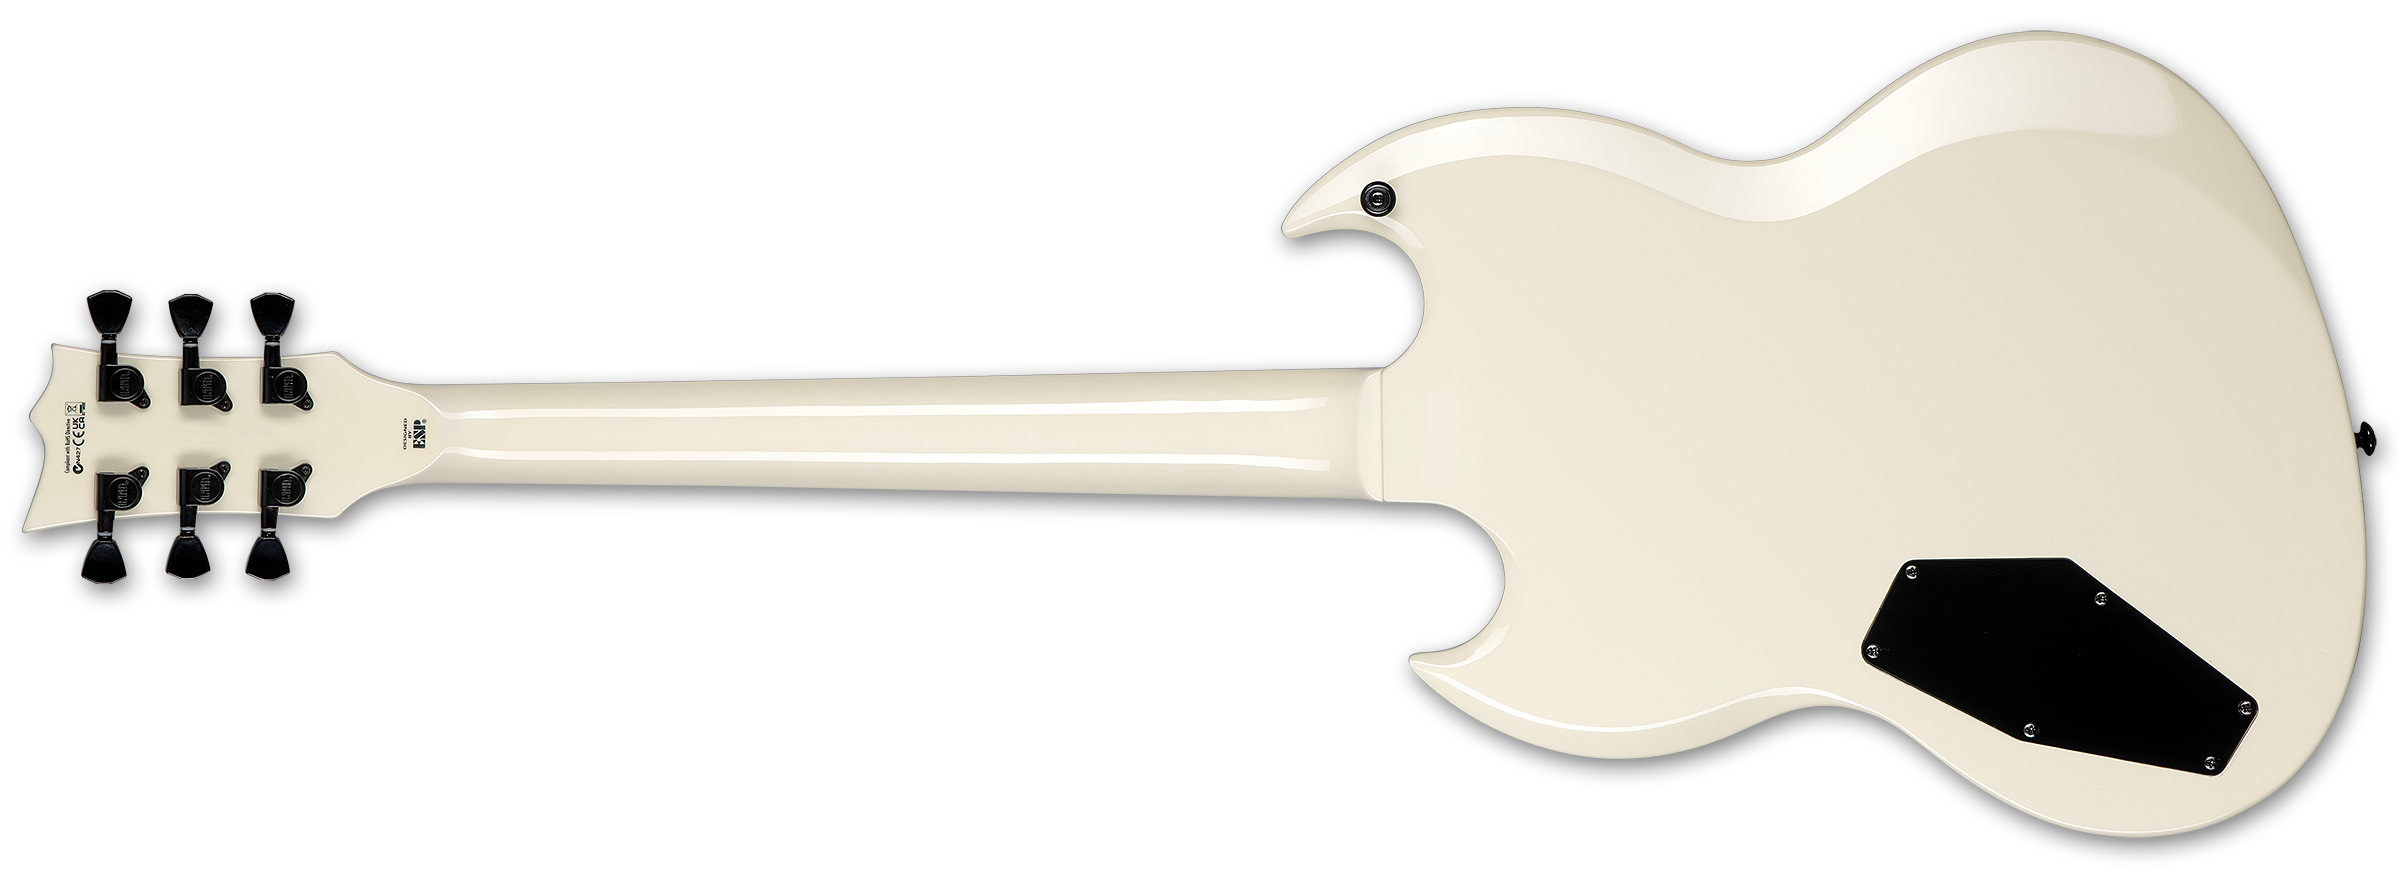 Ltd Viper-256 Hh Jat - Olympic White - Metal electric guitar - Variation 1